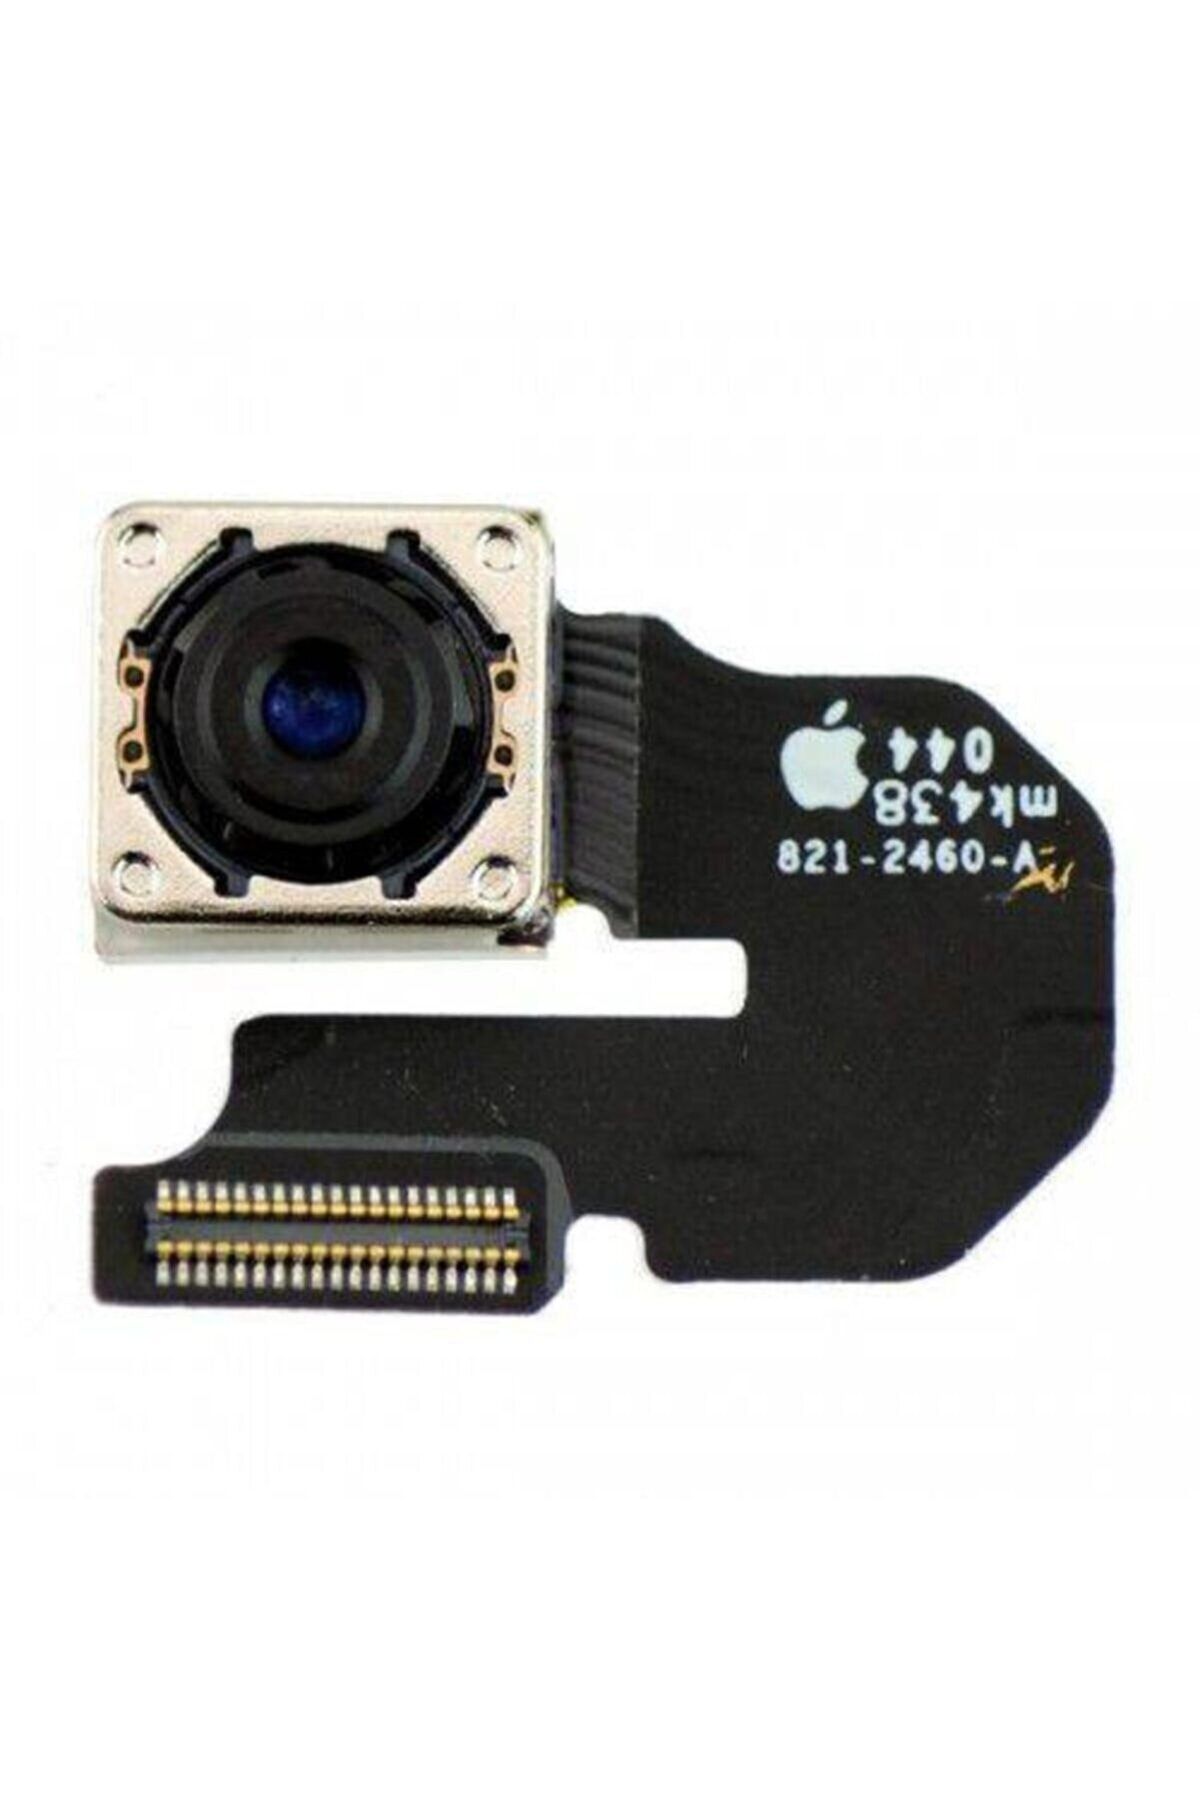 instatech Iphone 6s Plus (a1634, A1687) Uyumlu Arka Kamera